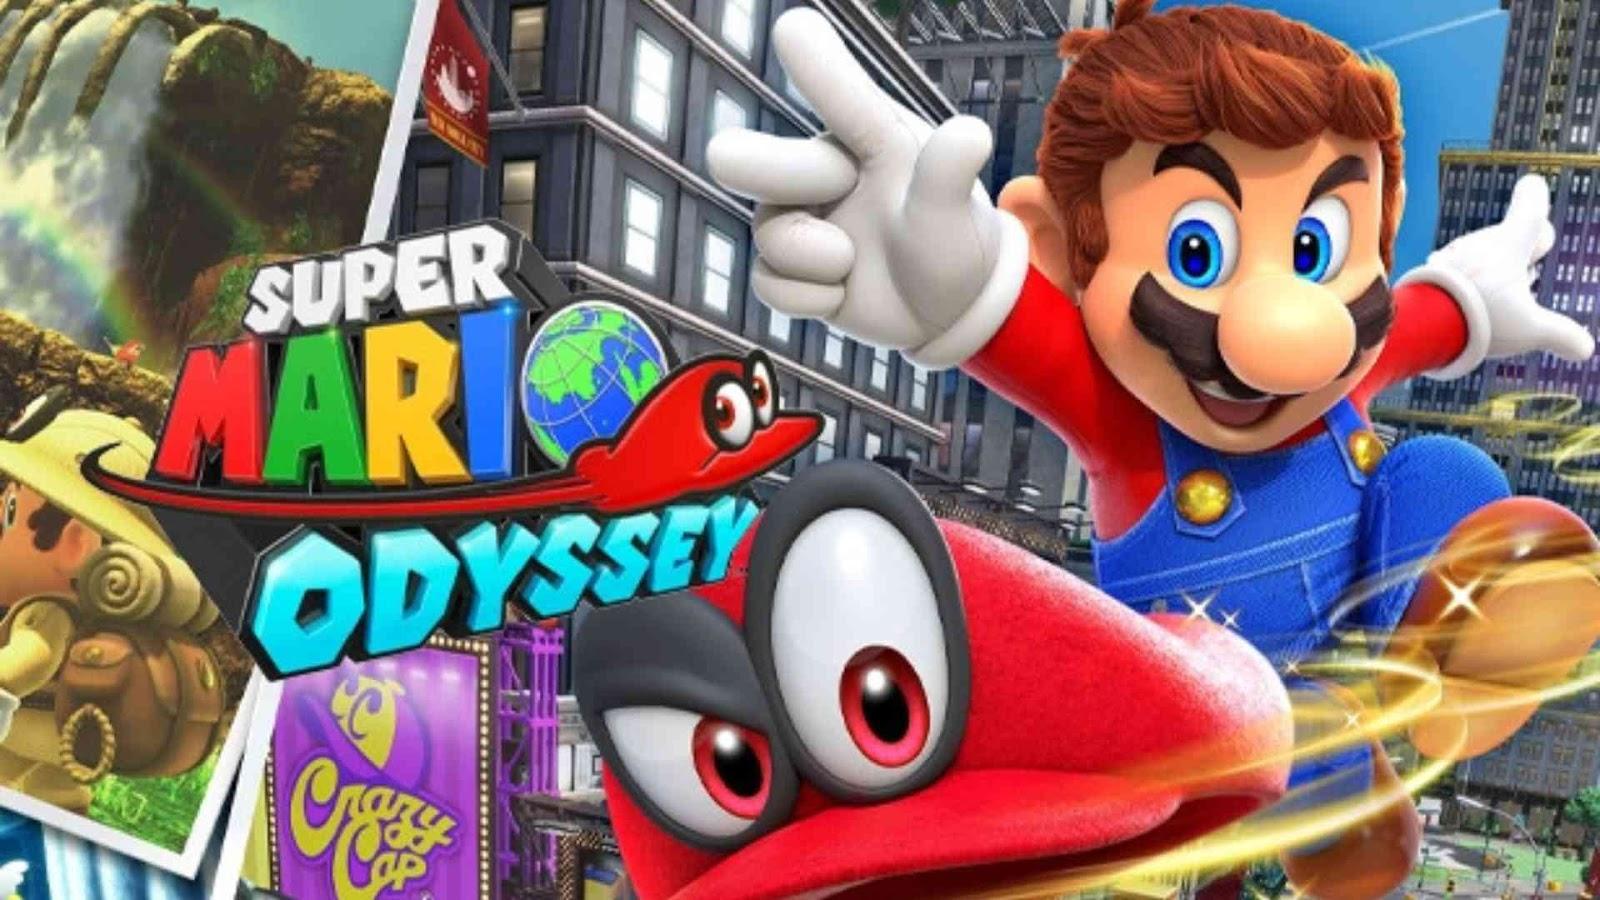 6. Super Mario Odyssey